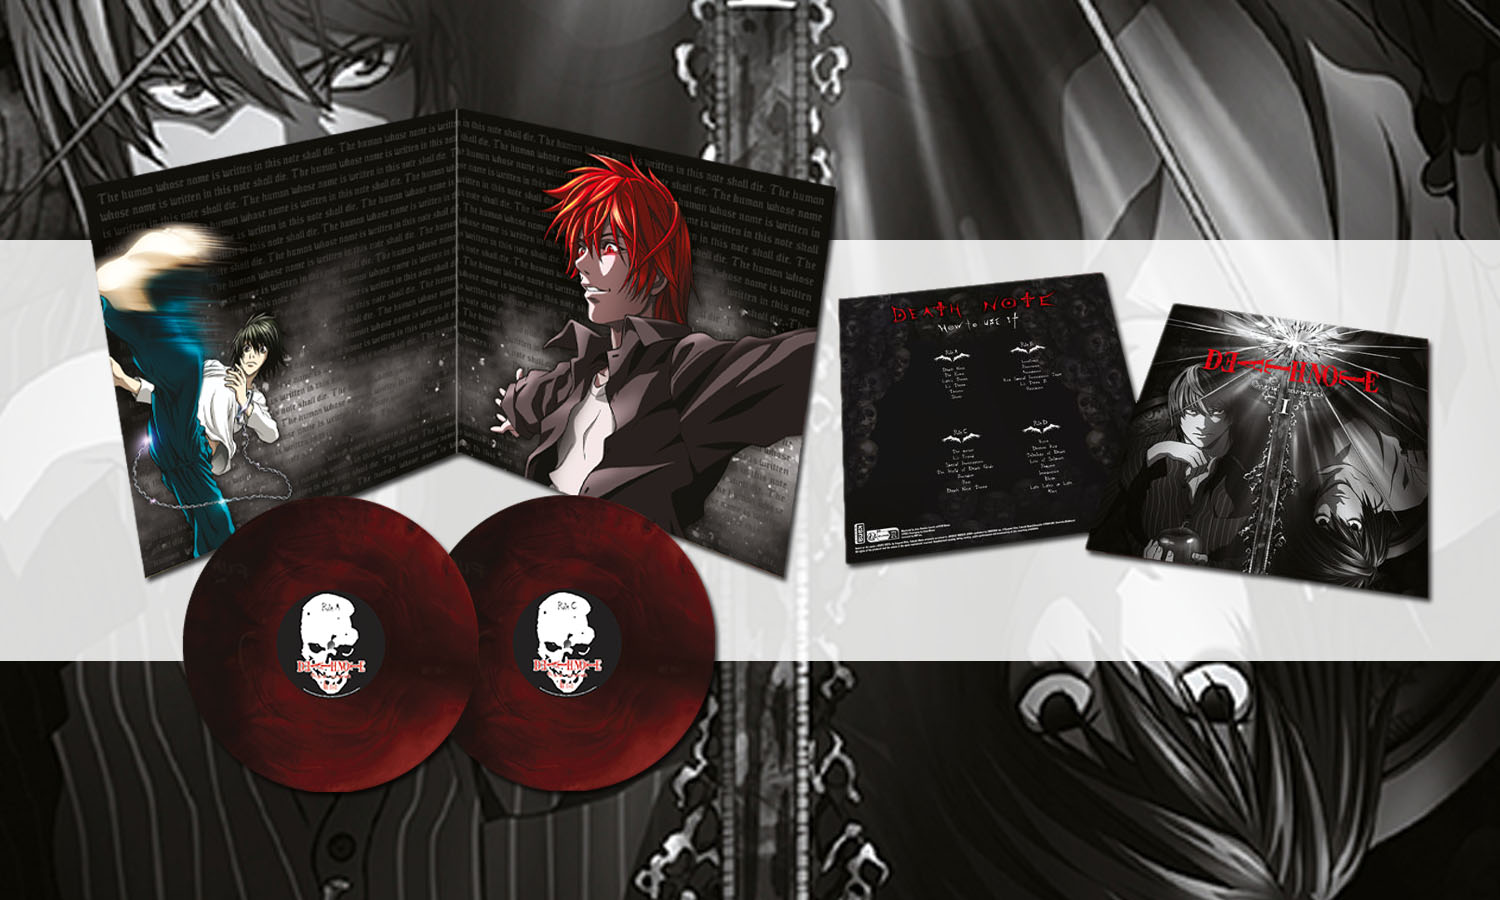 Death Note Original Soundtrack. Death Note Original Soundtrack II. Тетрадь смерти саундтрек